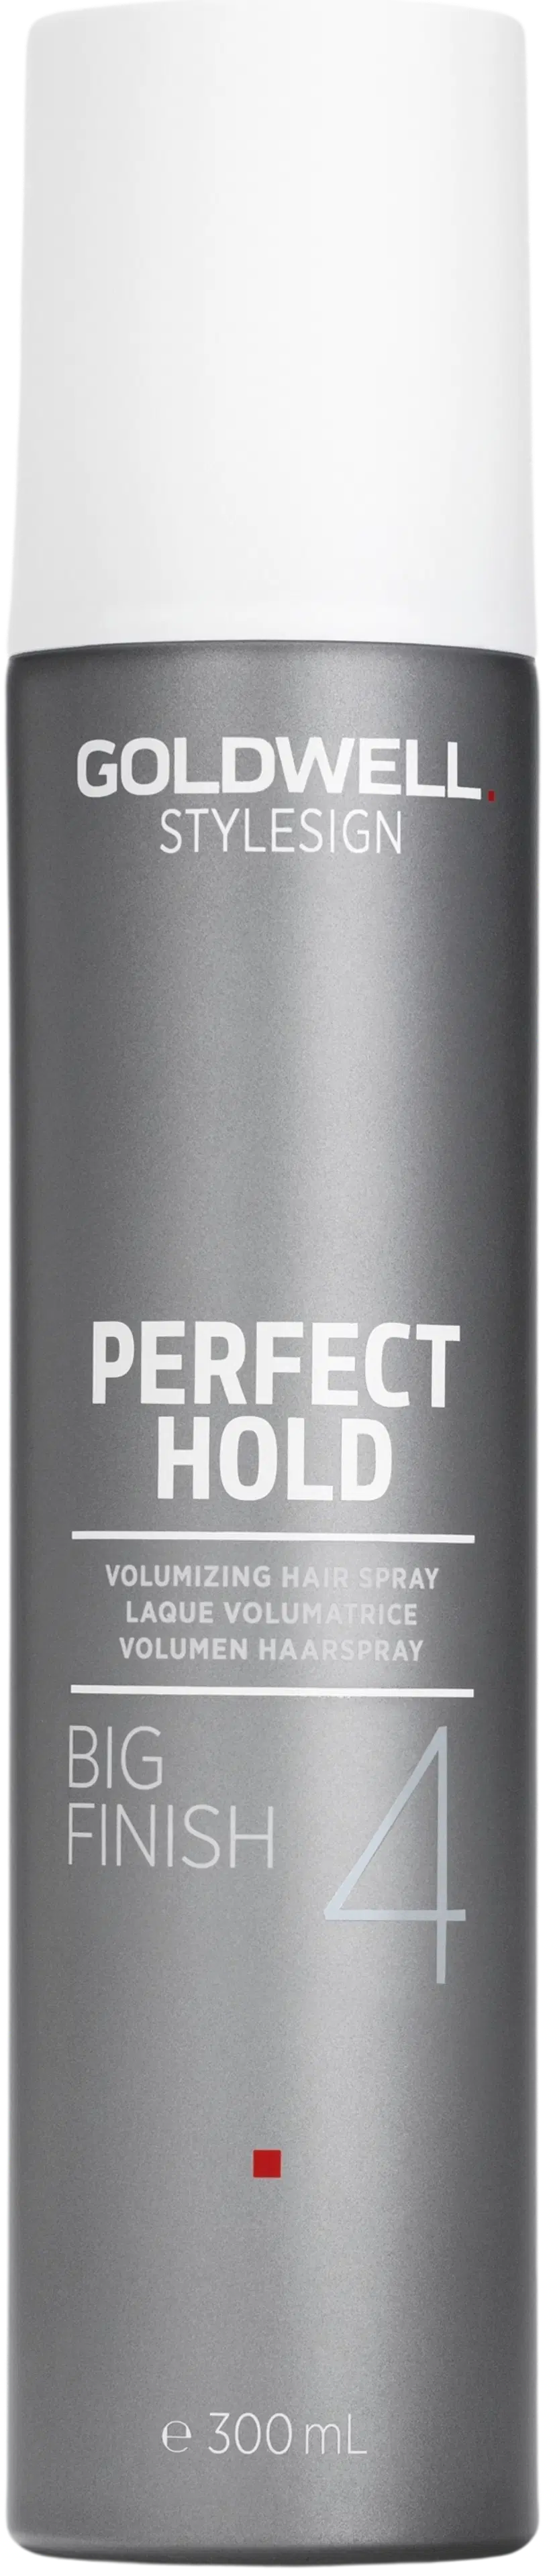 Goldwell StyleSign Perfect Hold Big Finish 4 Hair spray hiuslakka 300 ml